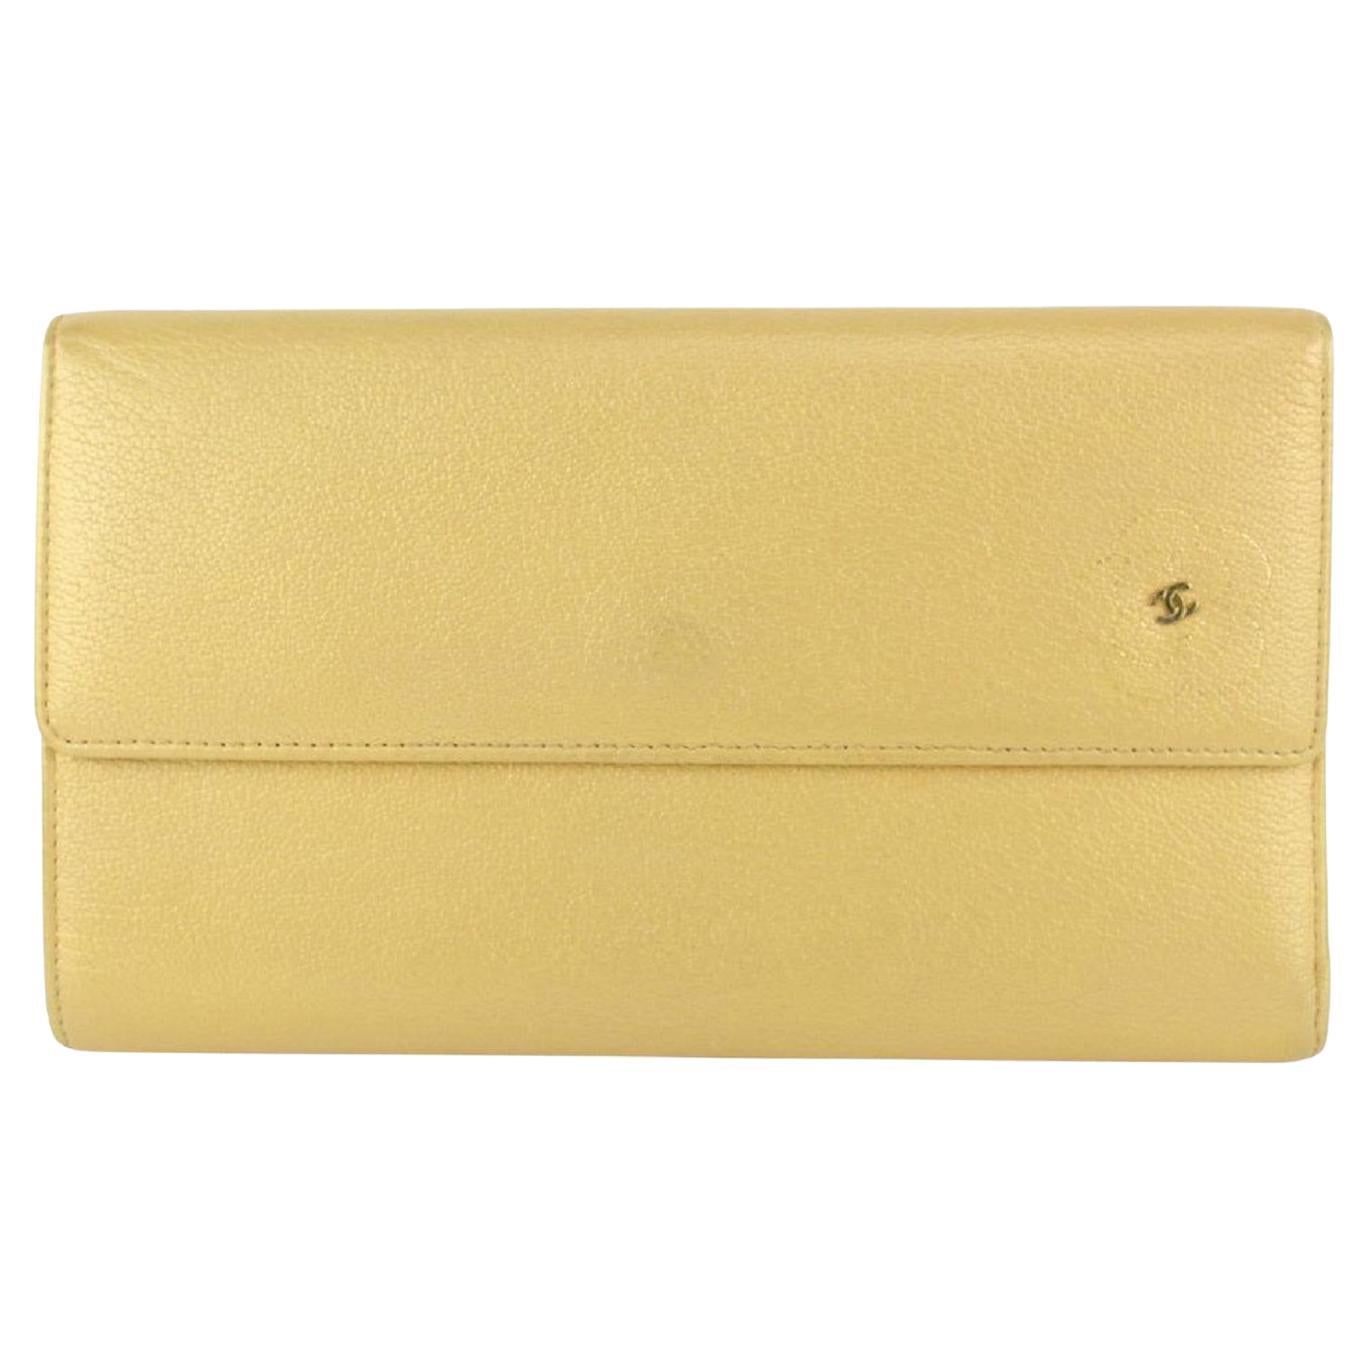 Chanel Gold CC Logo Long Trifold Flap Wallet 930c12